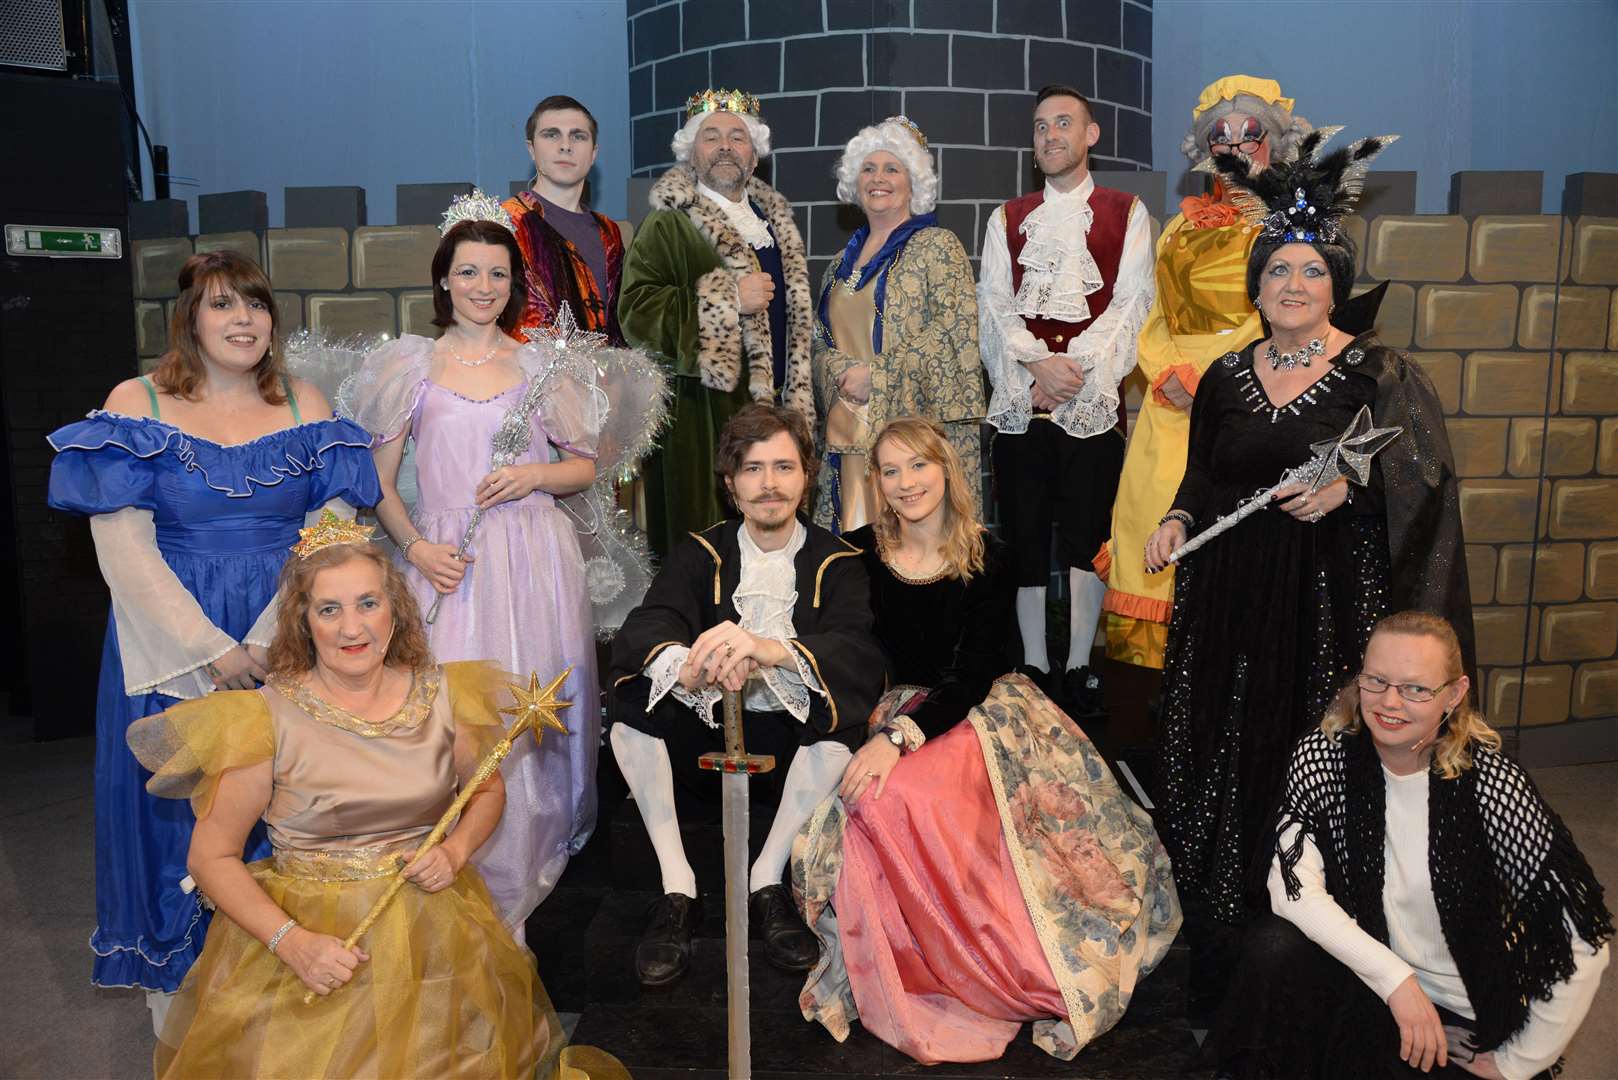 The cast of Blackfish Academy's production of Sleeping Beauty